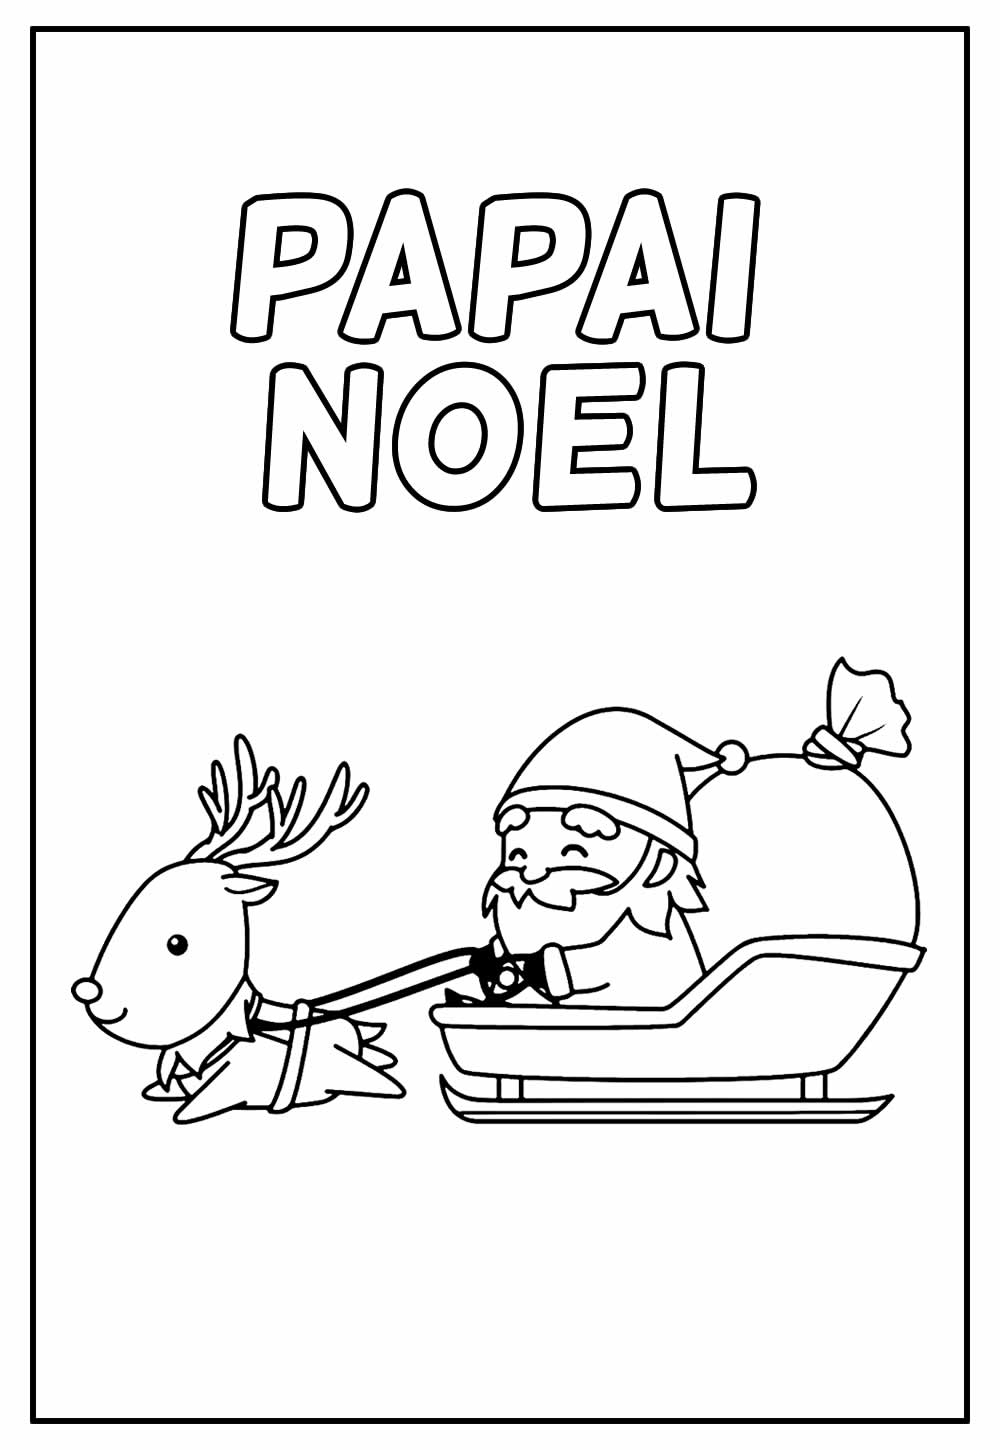 Desenho Educativo de Papai Noel com Trenó para colorir